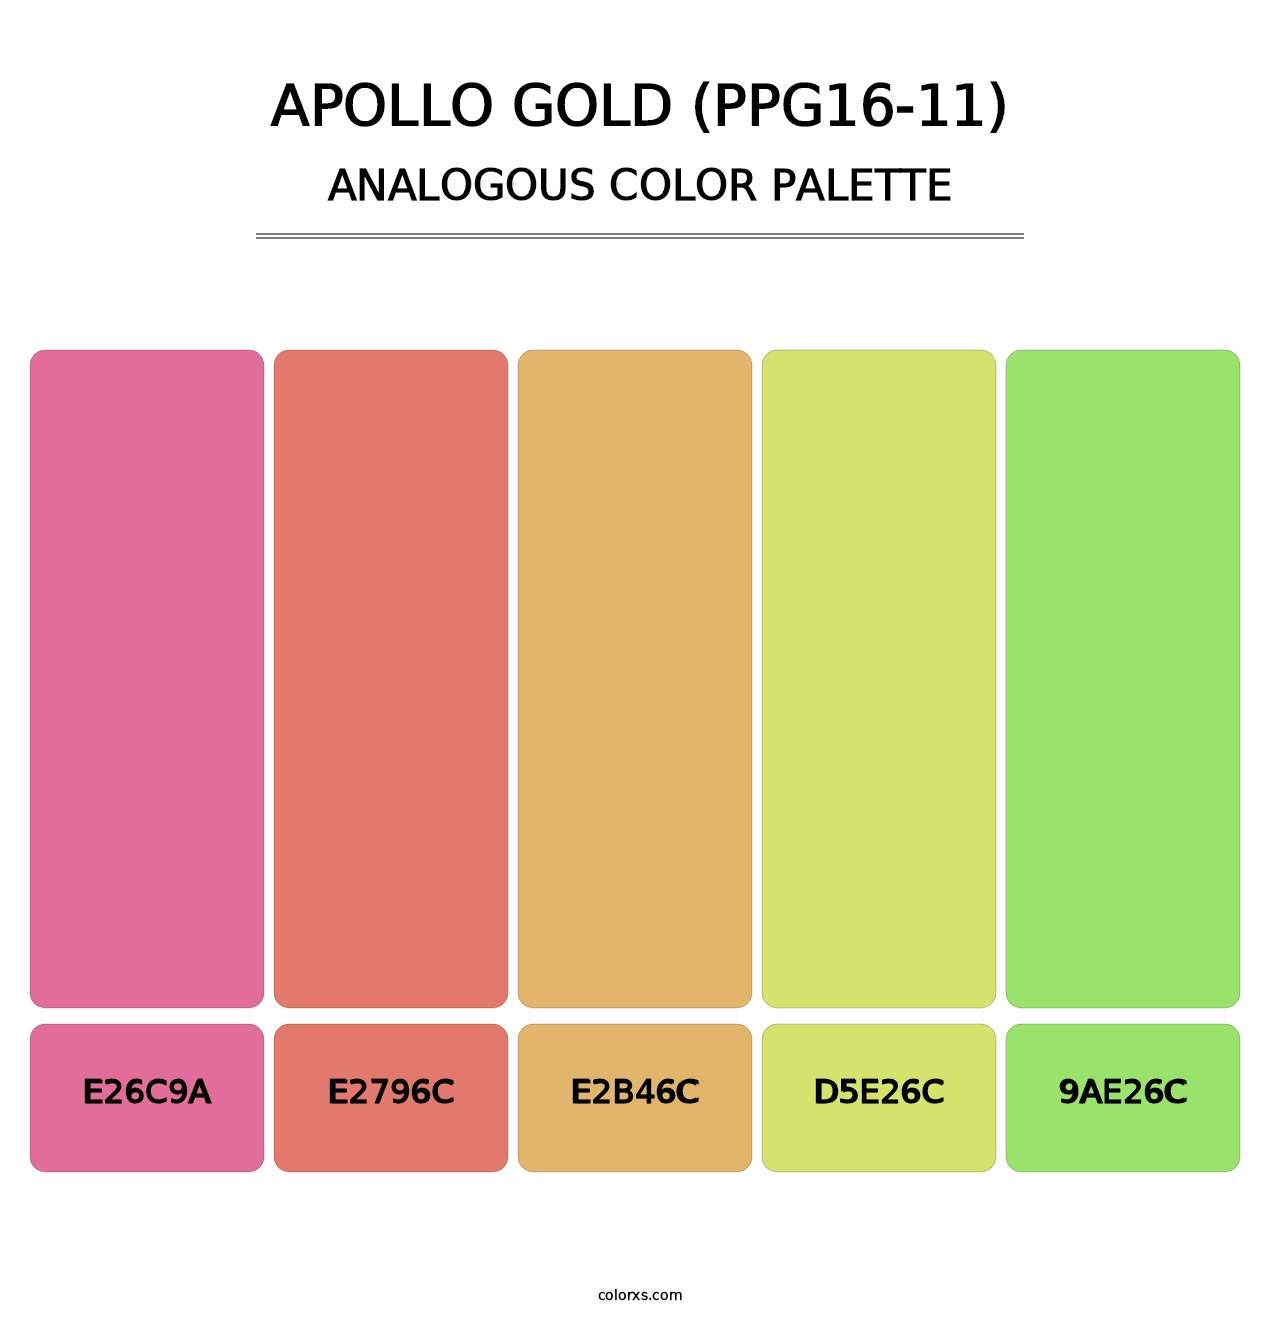 Apollo Gold (PPG16-11) - Analogous Color Palette